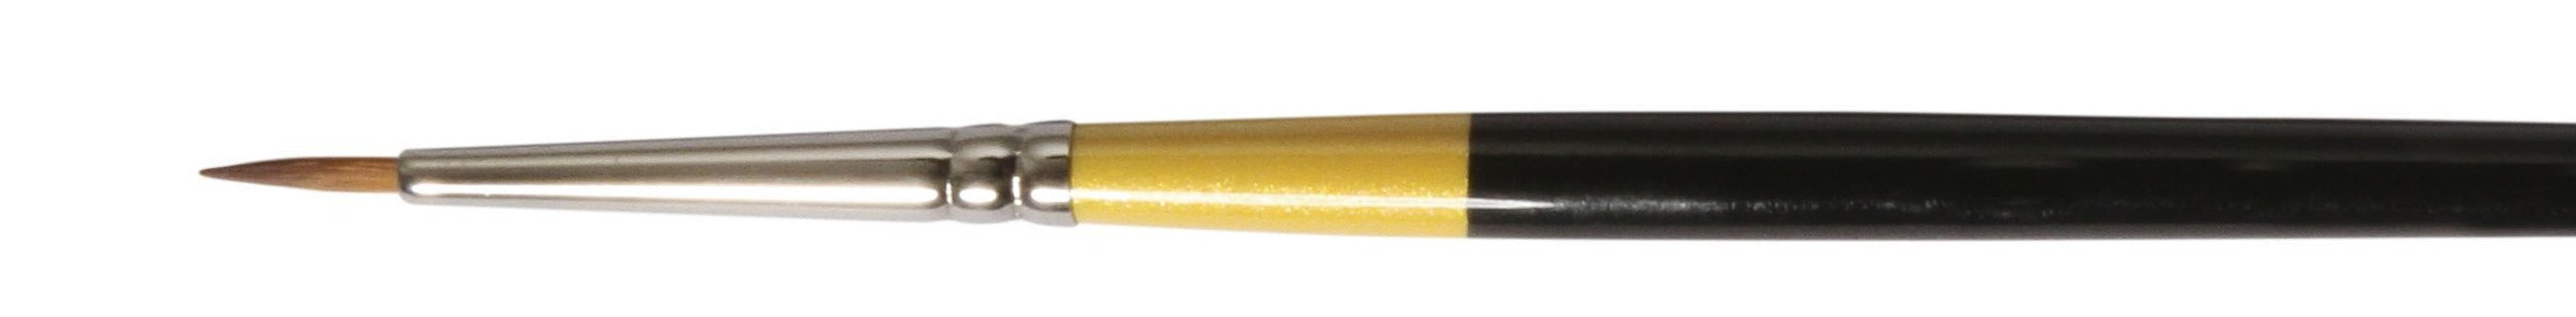 Daler Rowney System 3 Short Handle Brush Round  SY85 Size 0 Shape: Round Hair Width: 1.4 mm Hair Length: 8.7 mm Handle Length: Short